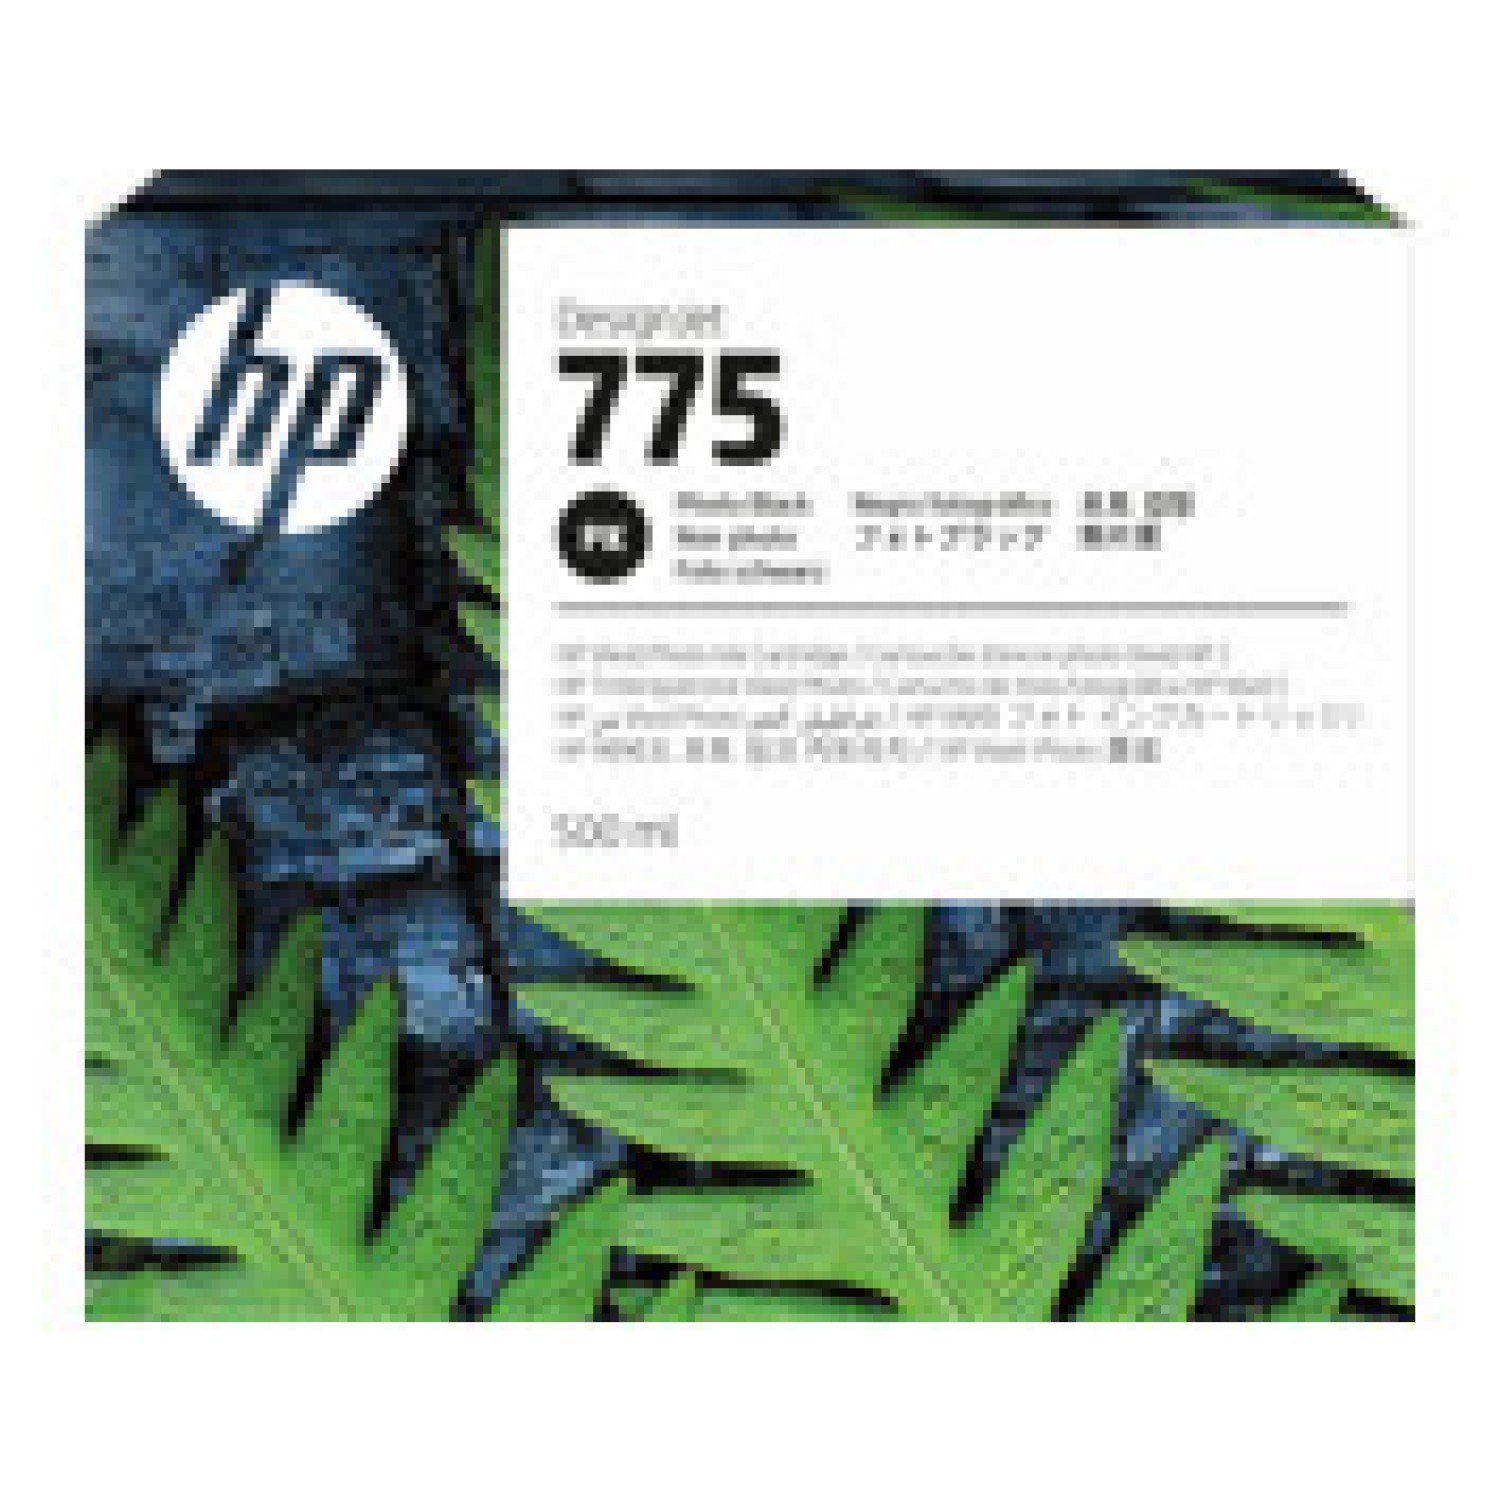 HP 775 500-ml Photo Black Ink Cartridge